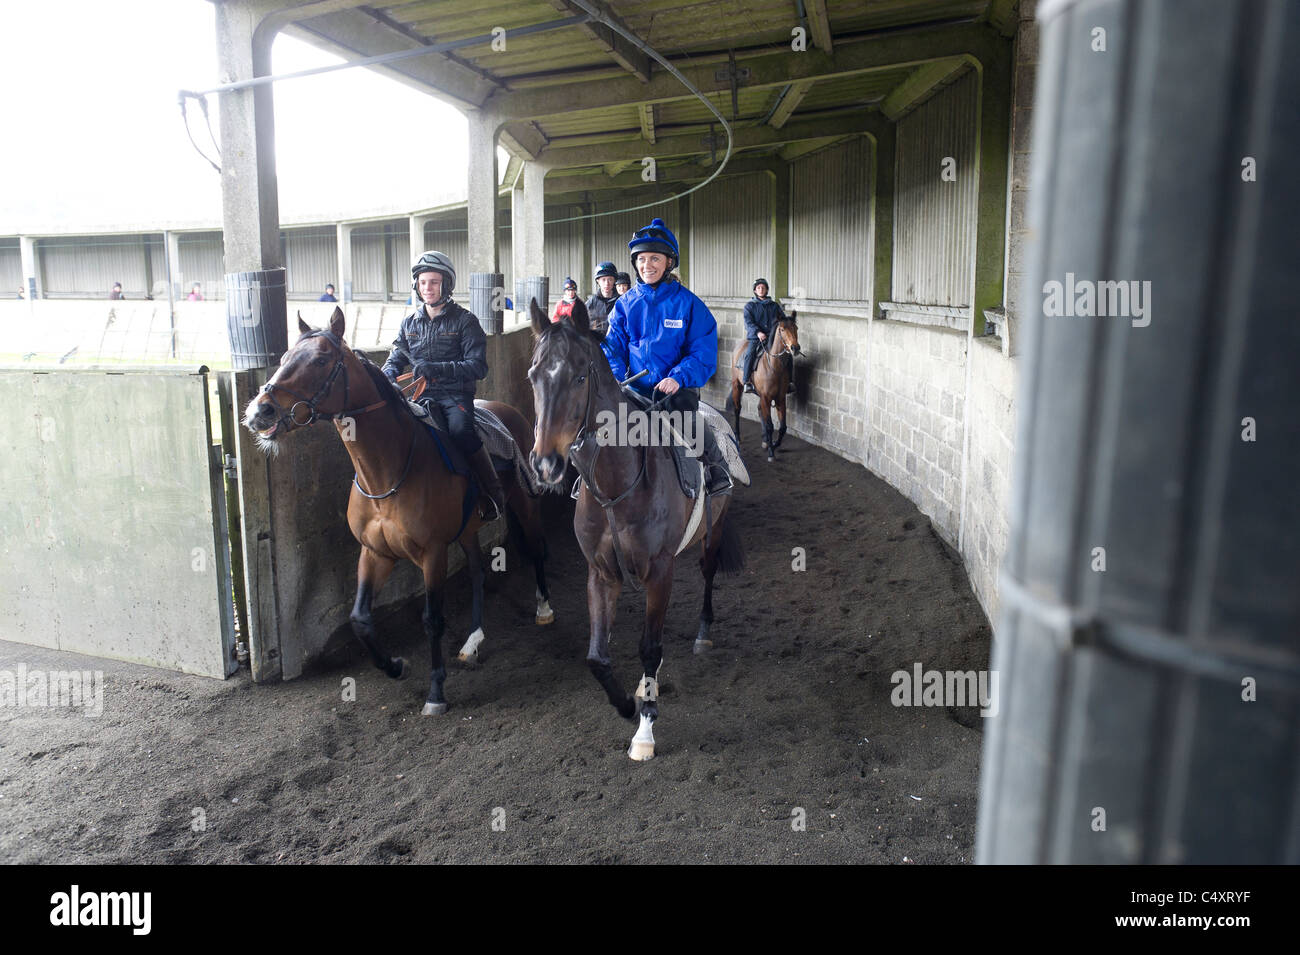 horse riding school Stock Photo